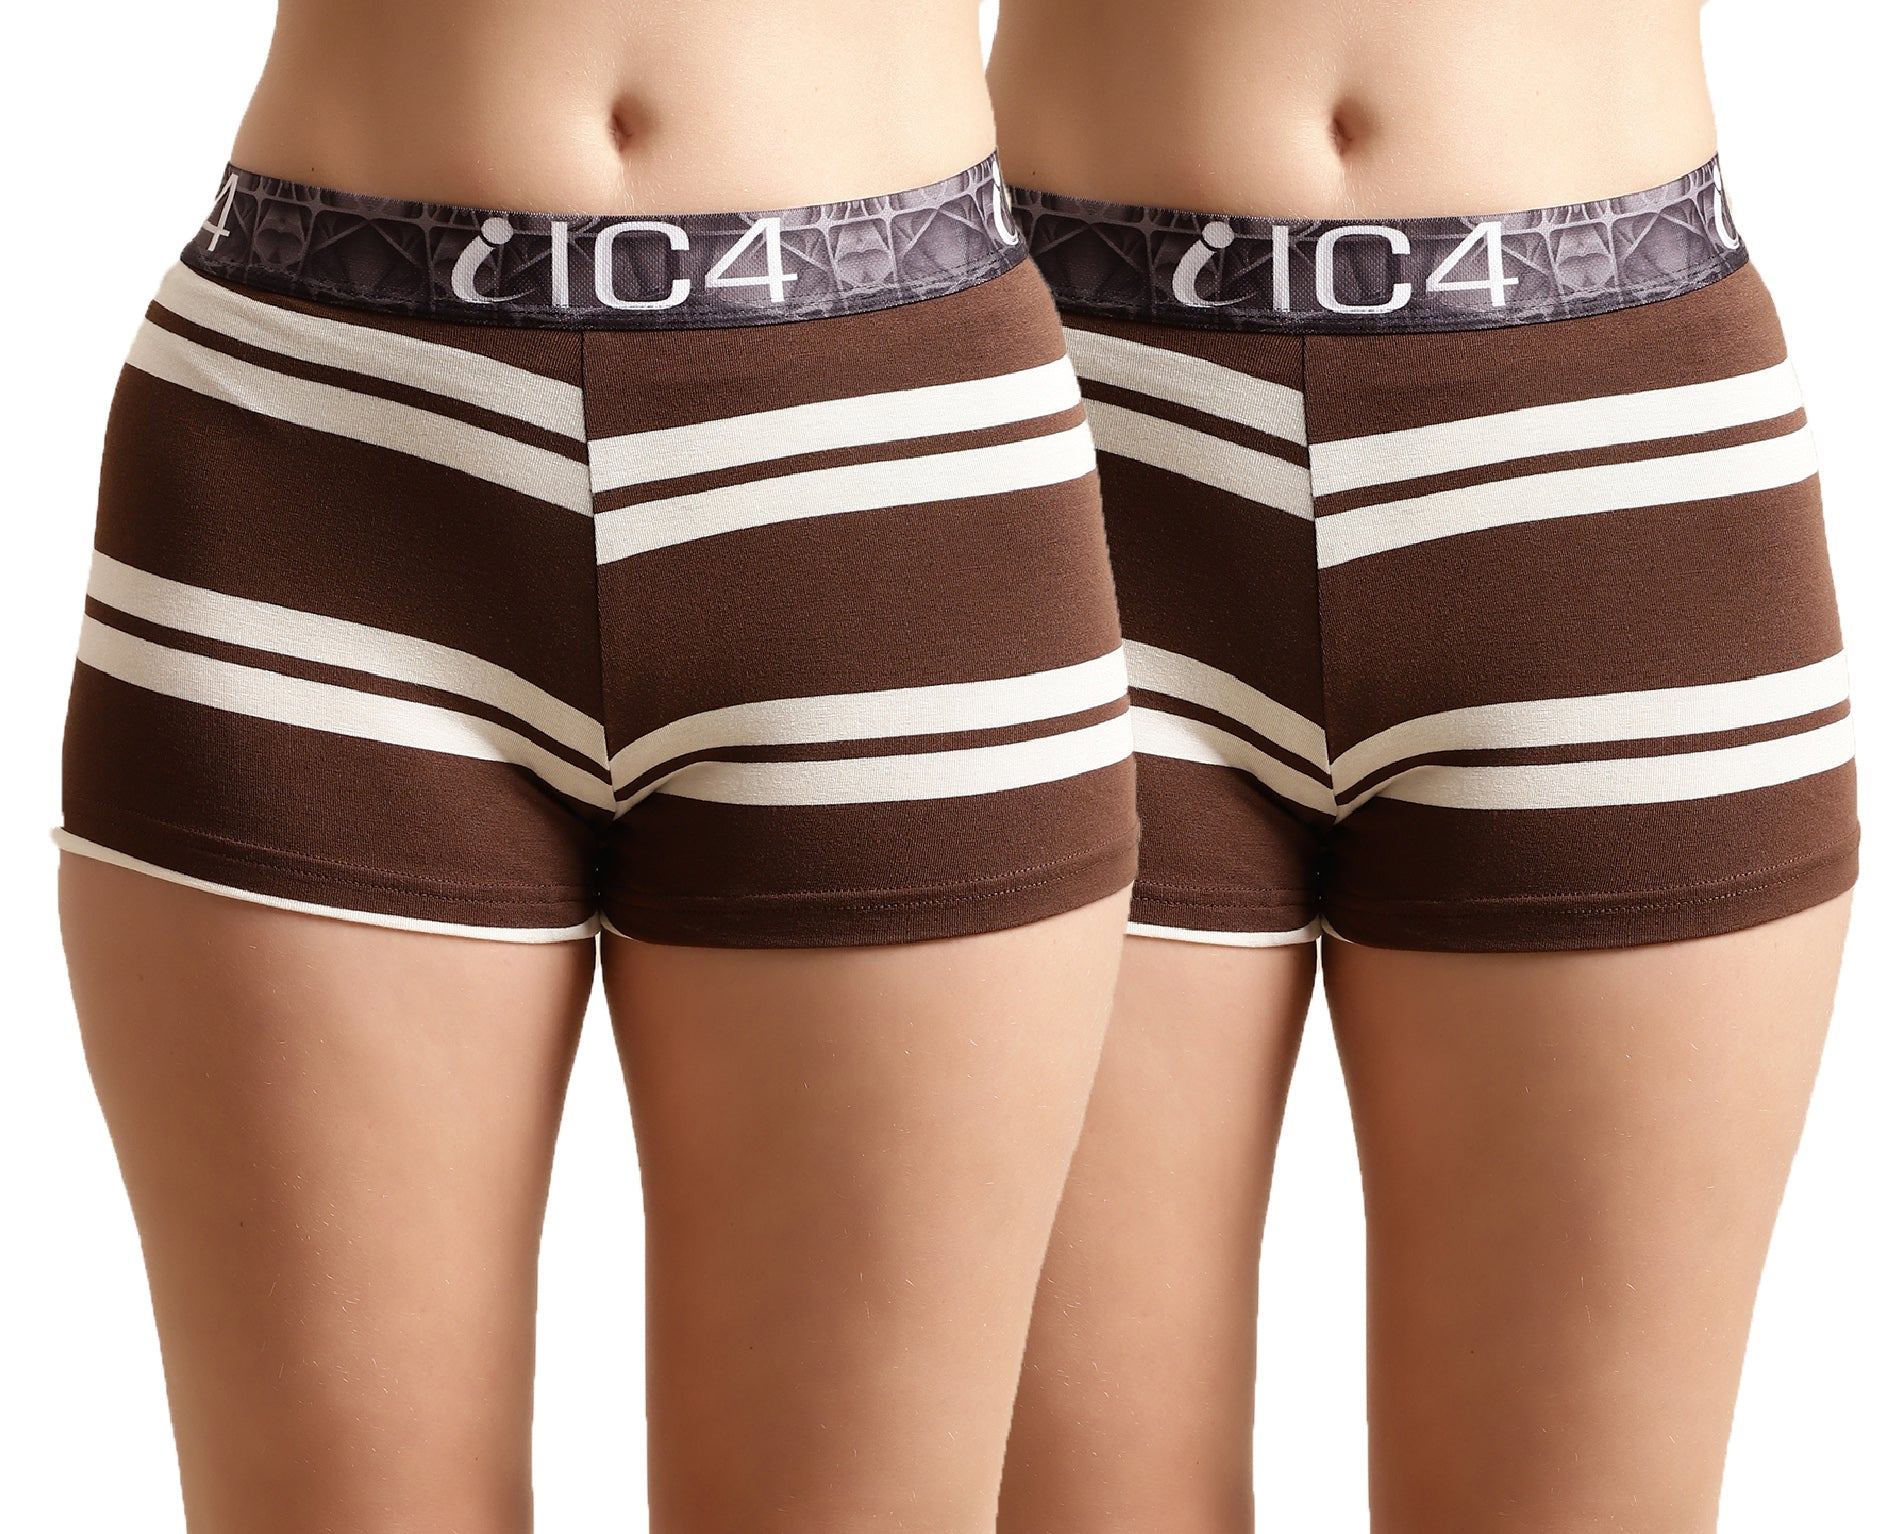 IC4 Women's stripe Fashion Boyshorts Combo Pack of 2, Brown